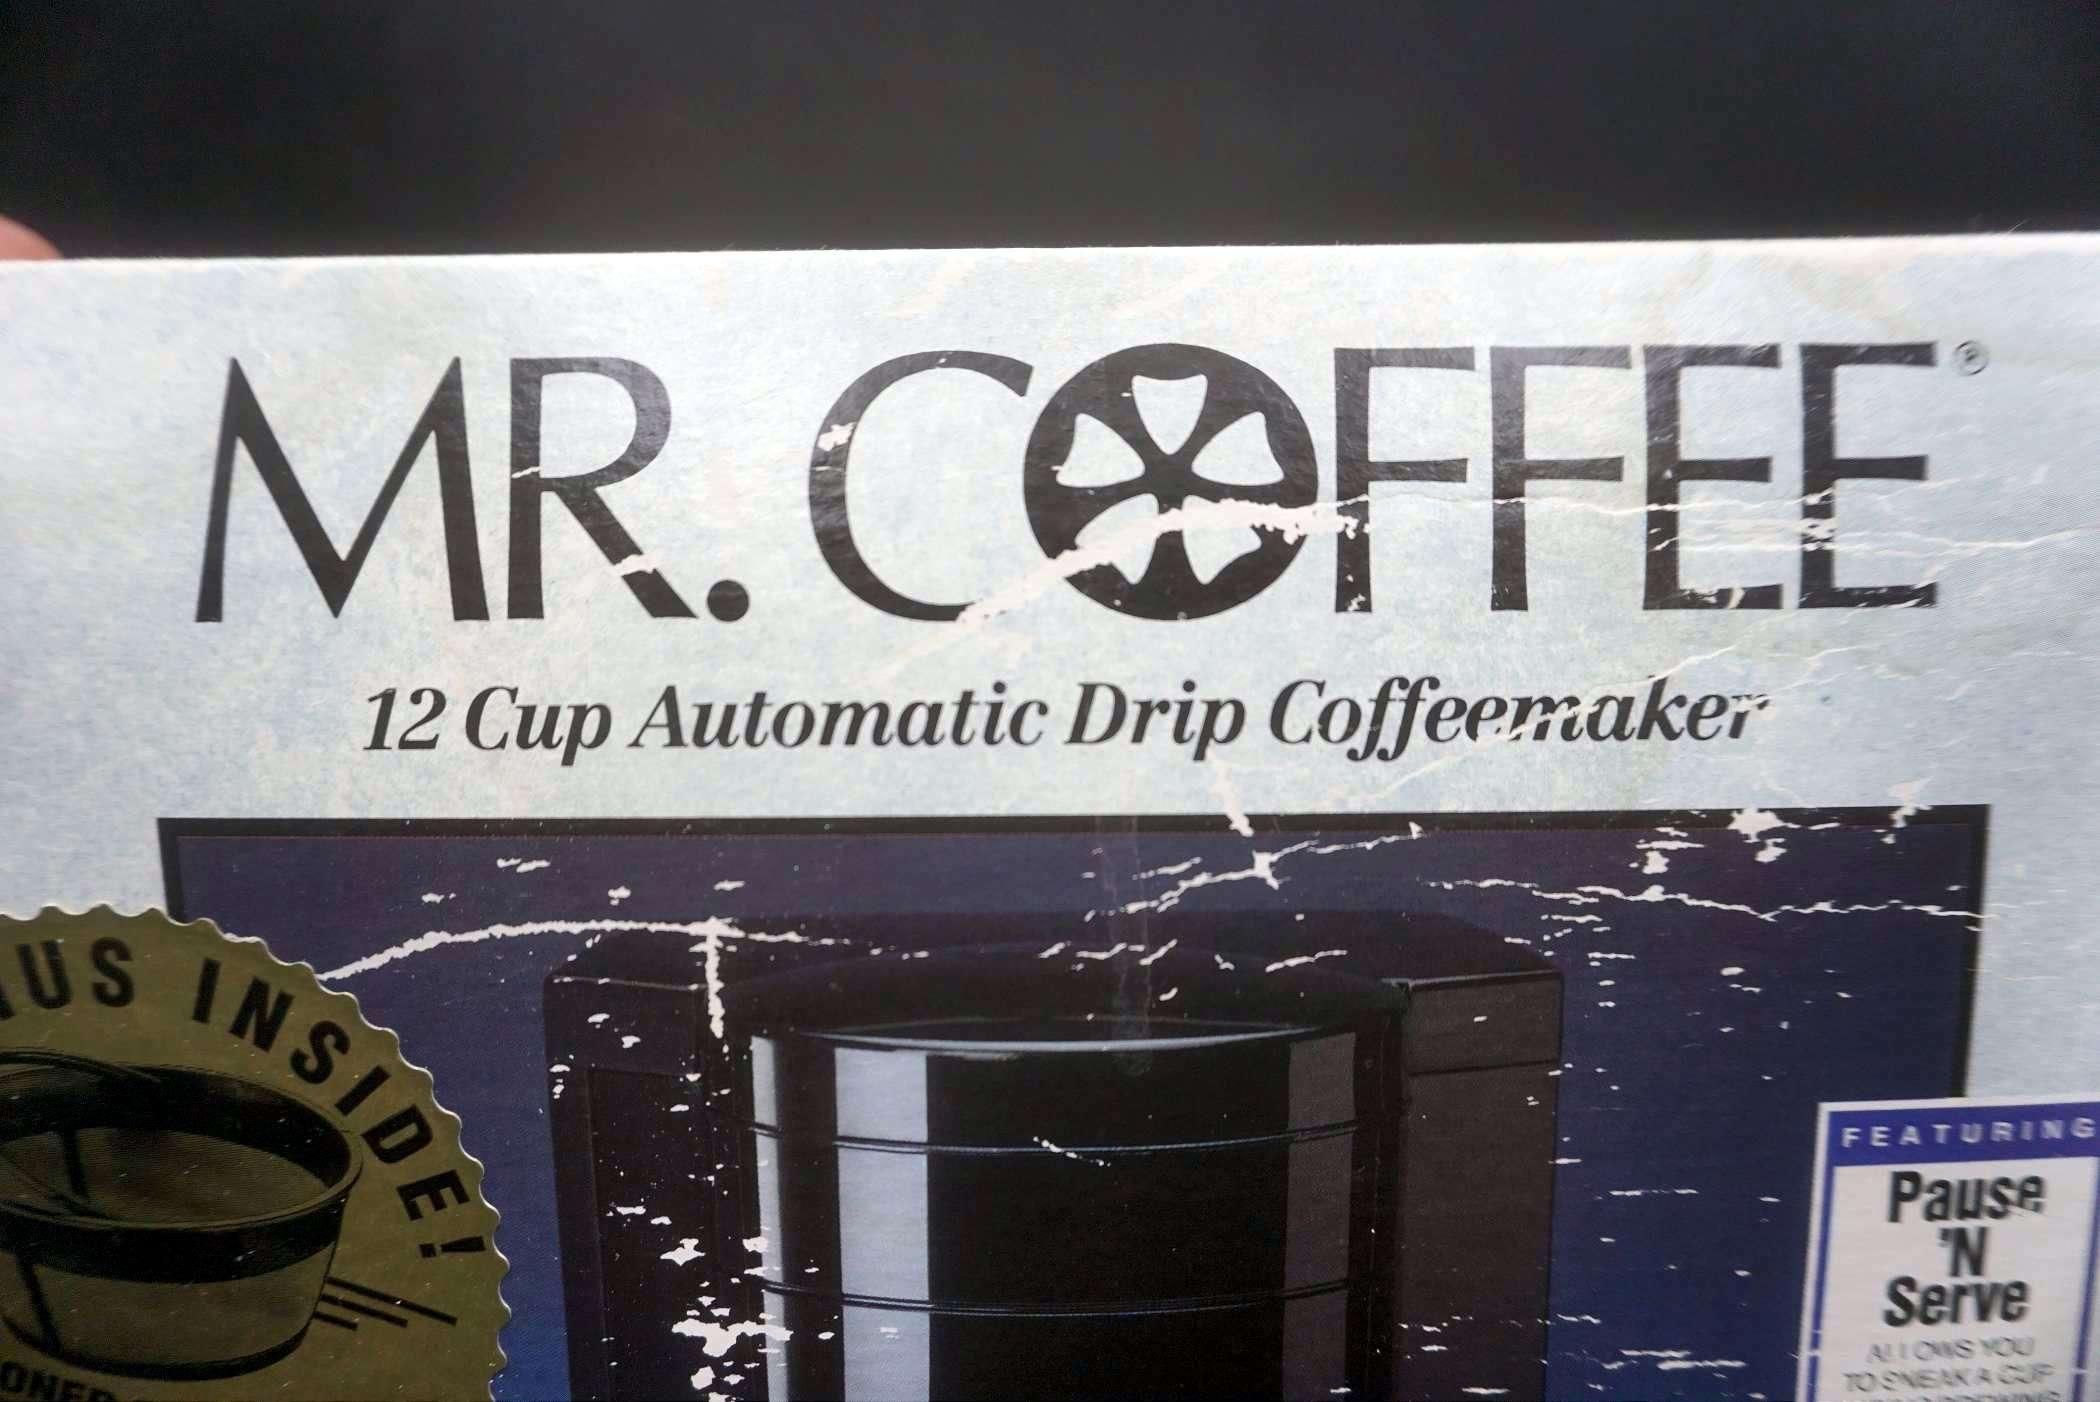 Mr. Coffee 12 Cup Automatic Drip Coffeemaker